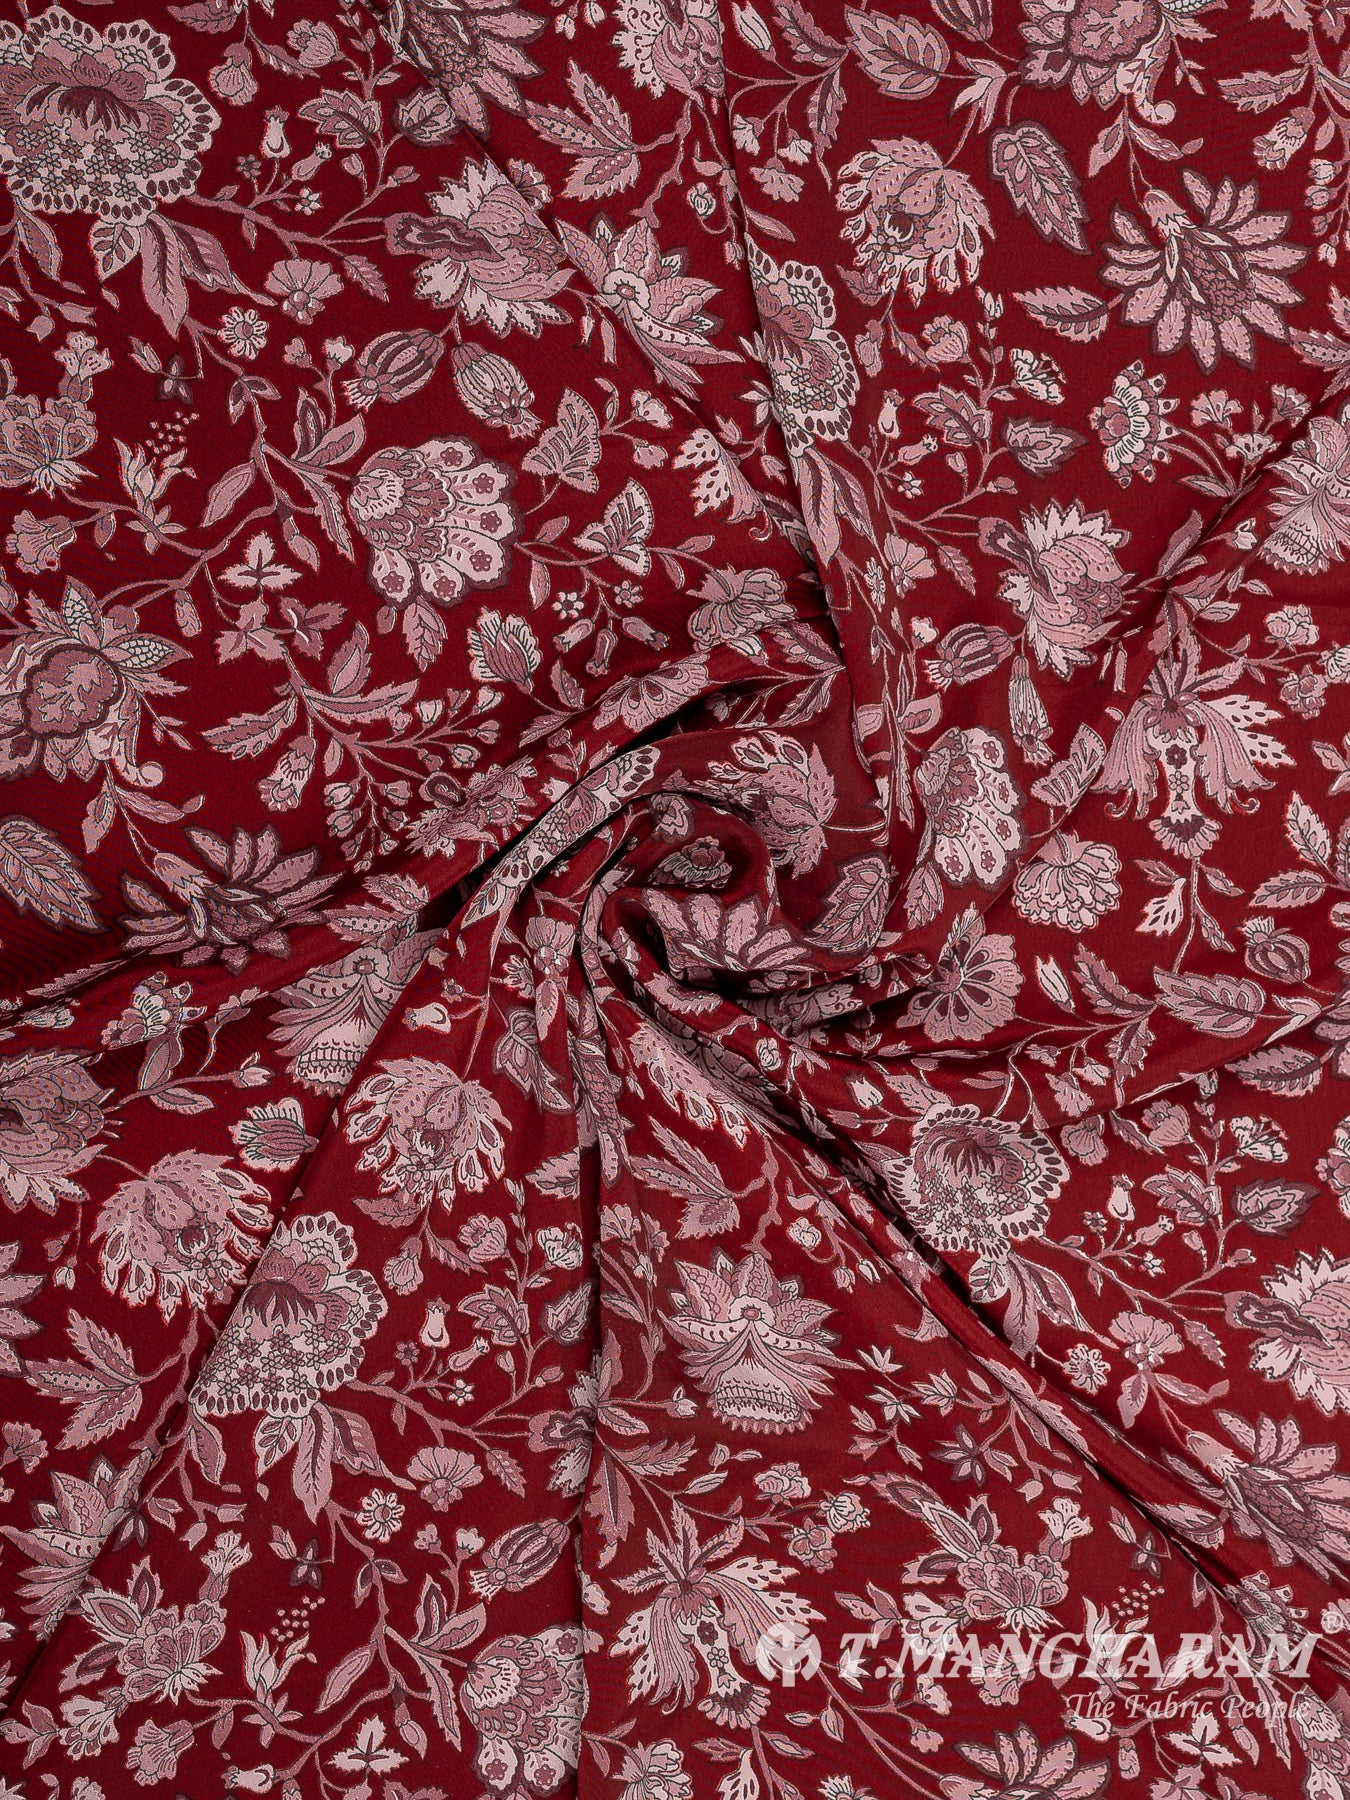 Maroon Crepe Fabric - EB6907 view-1